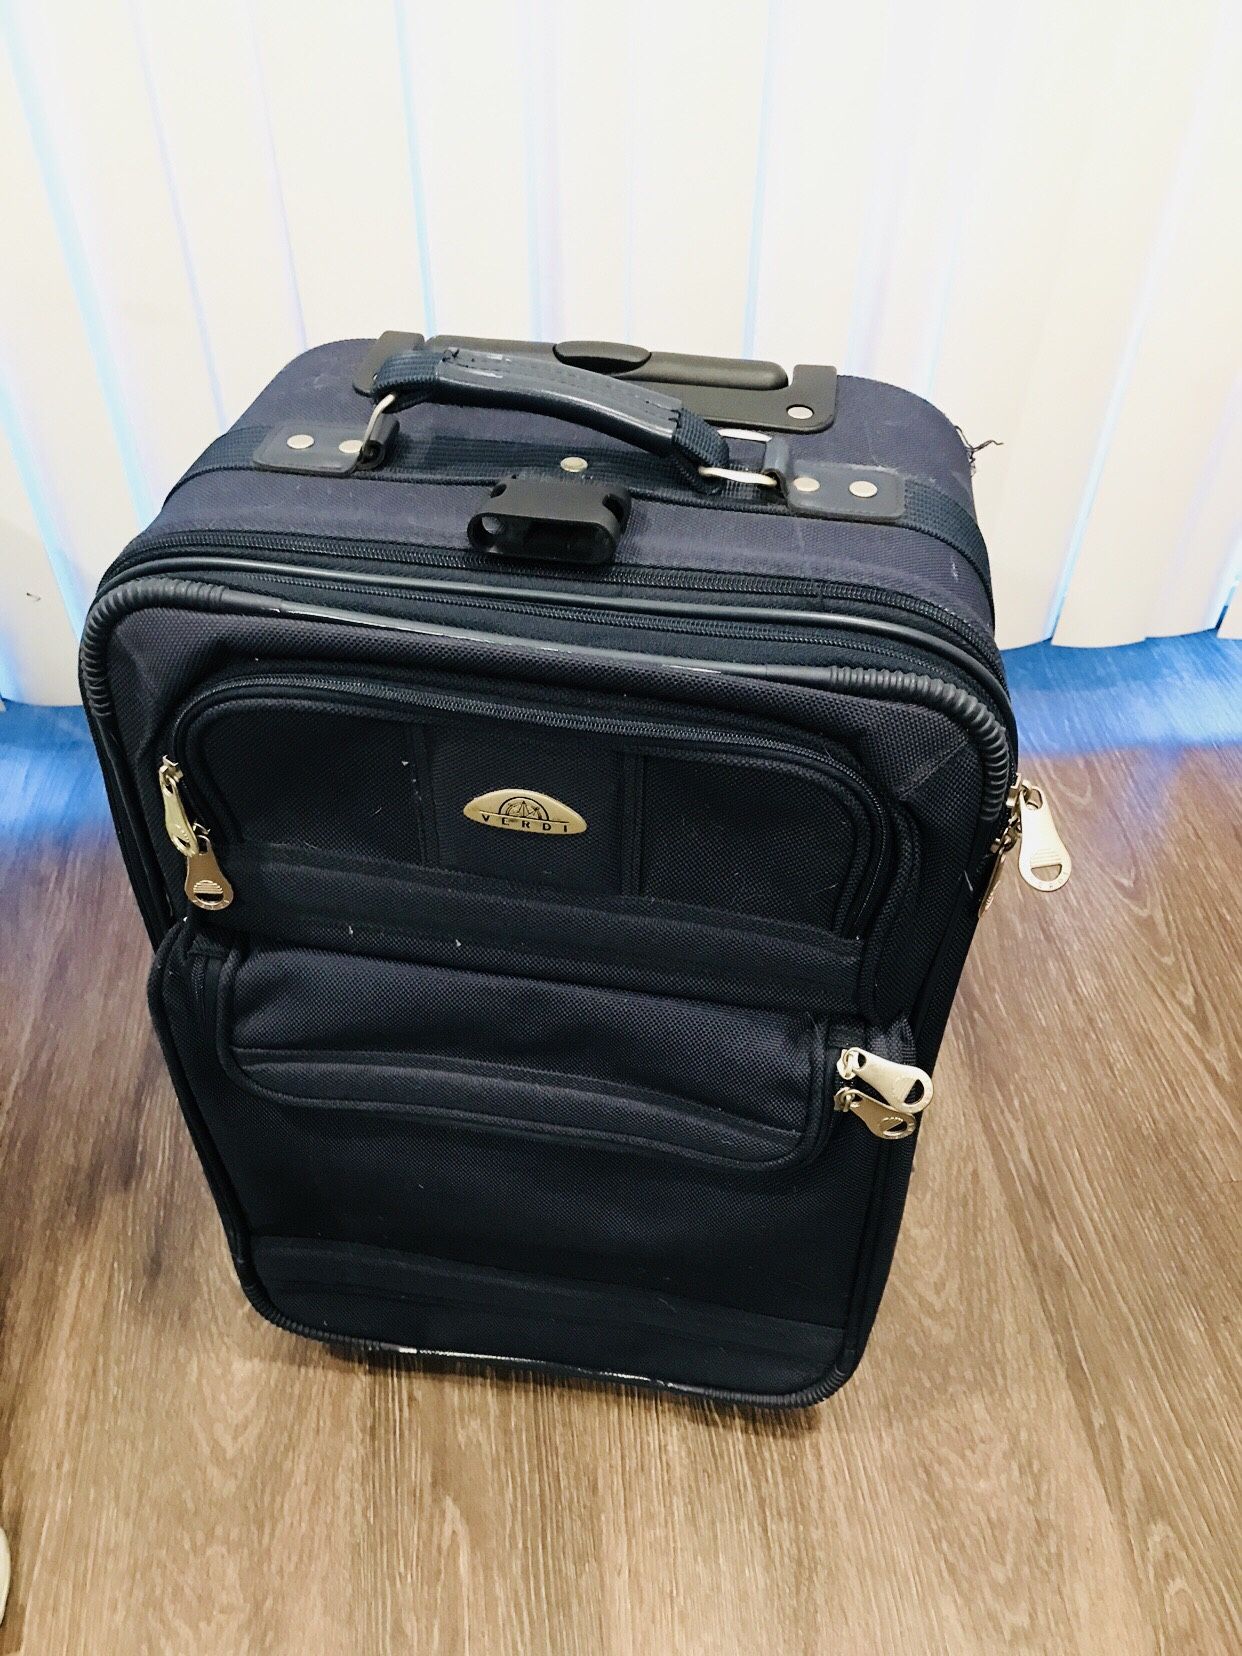 Carryon suitcase